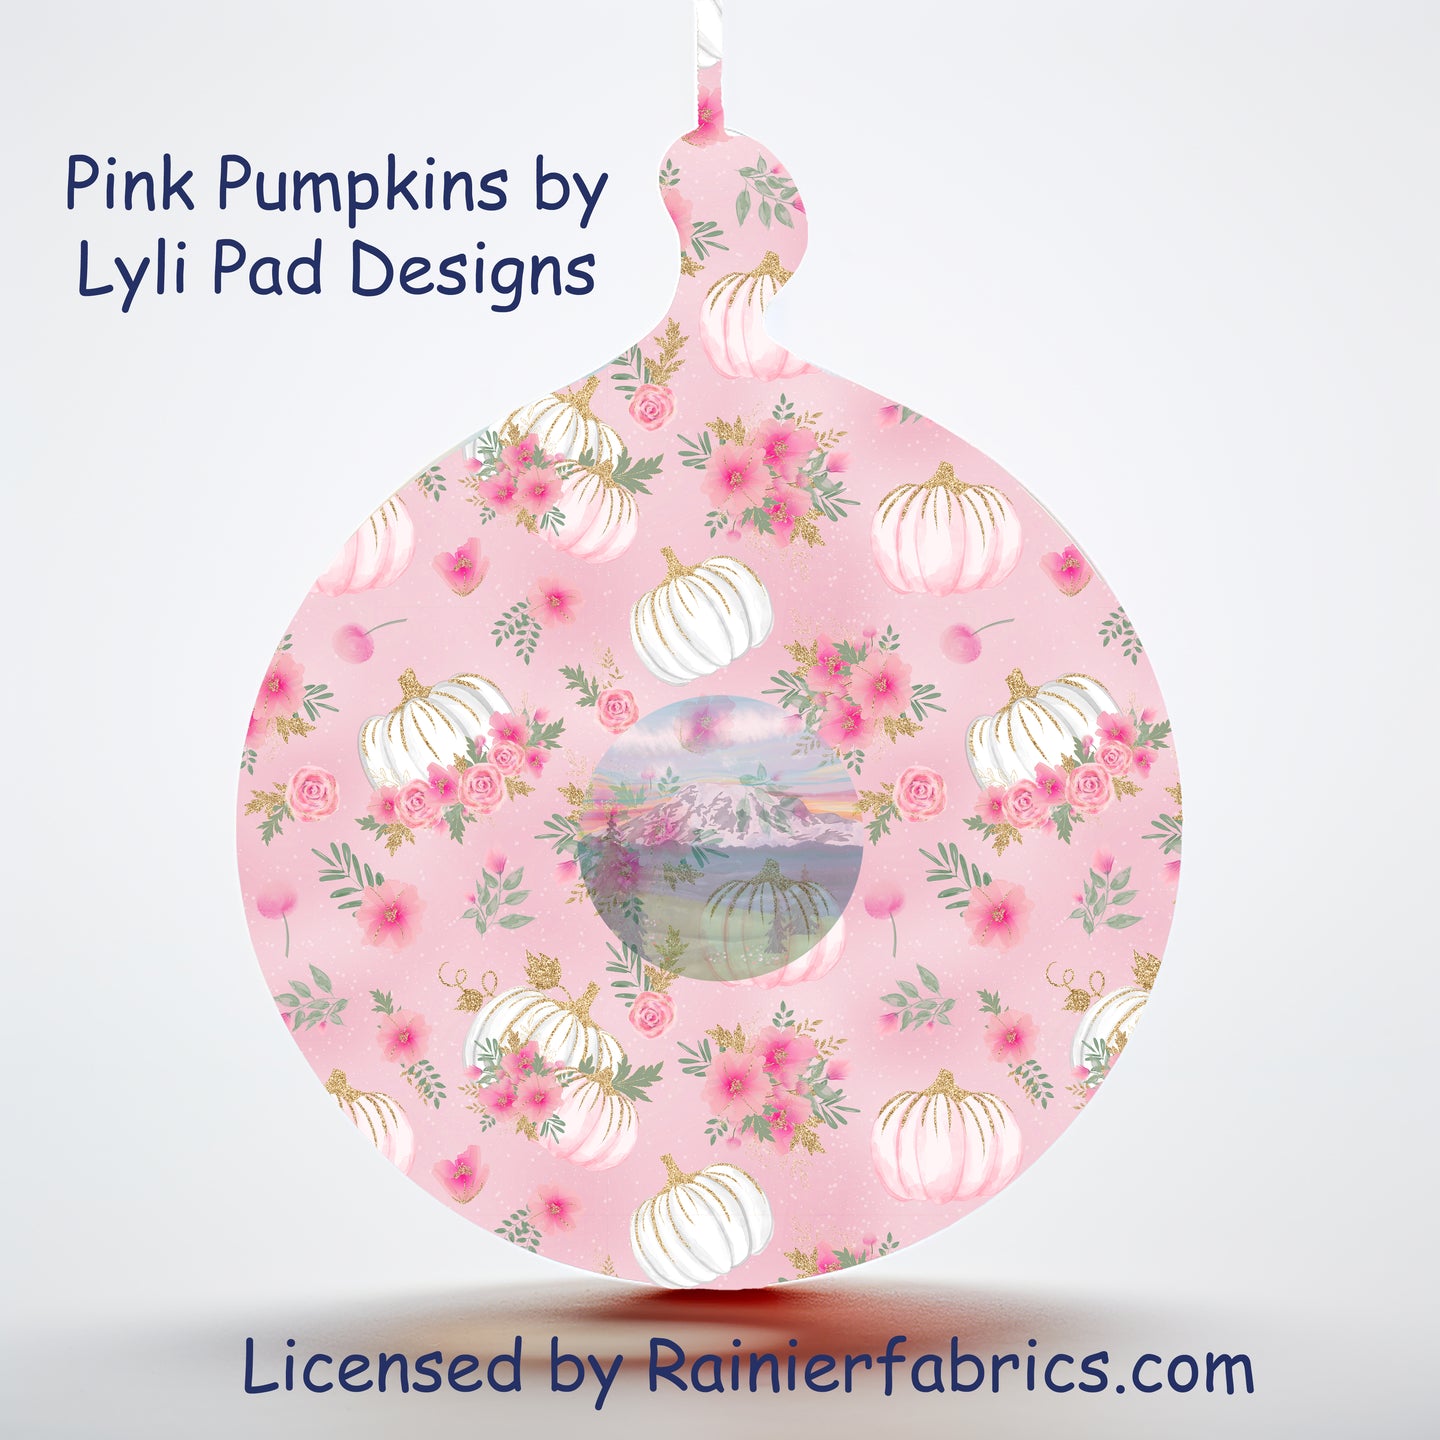 Pink Pumpkins by LyliPad Designs